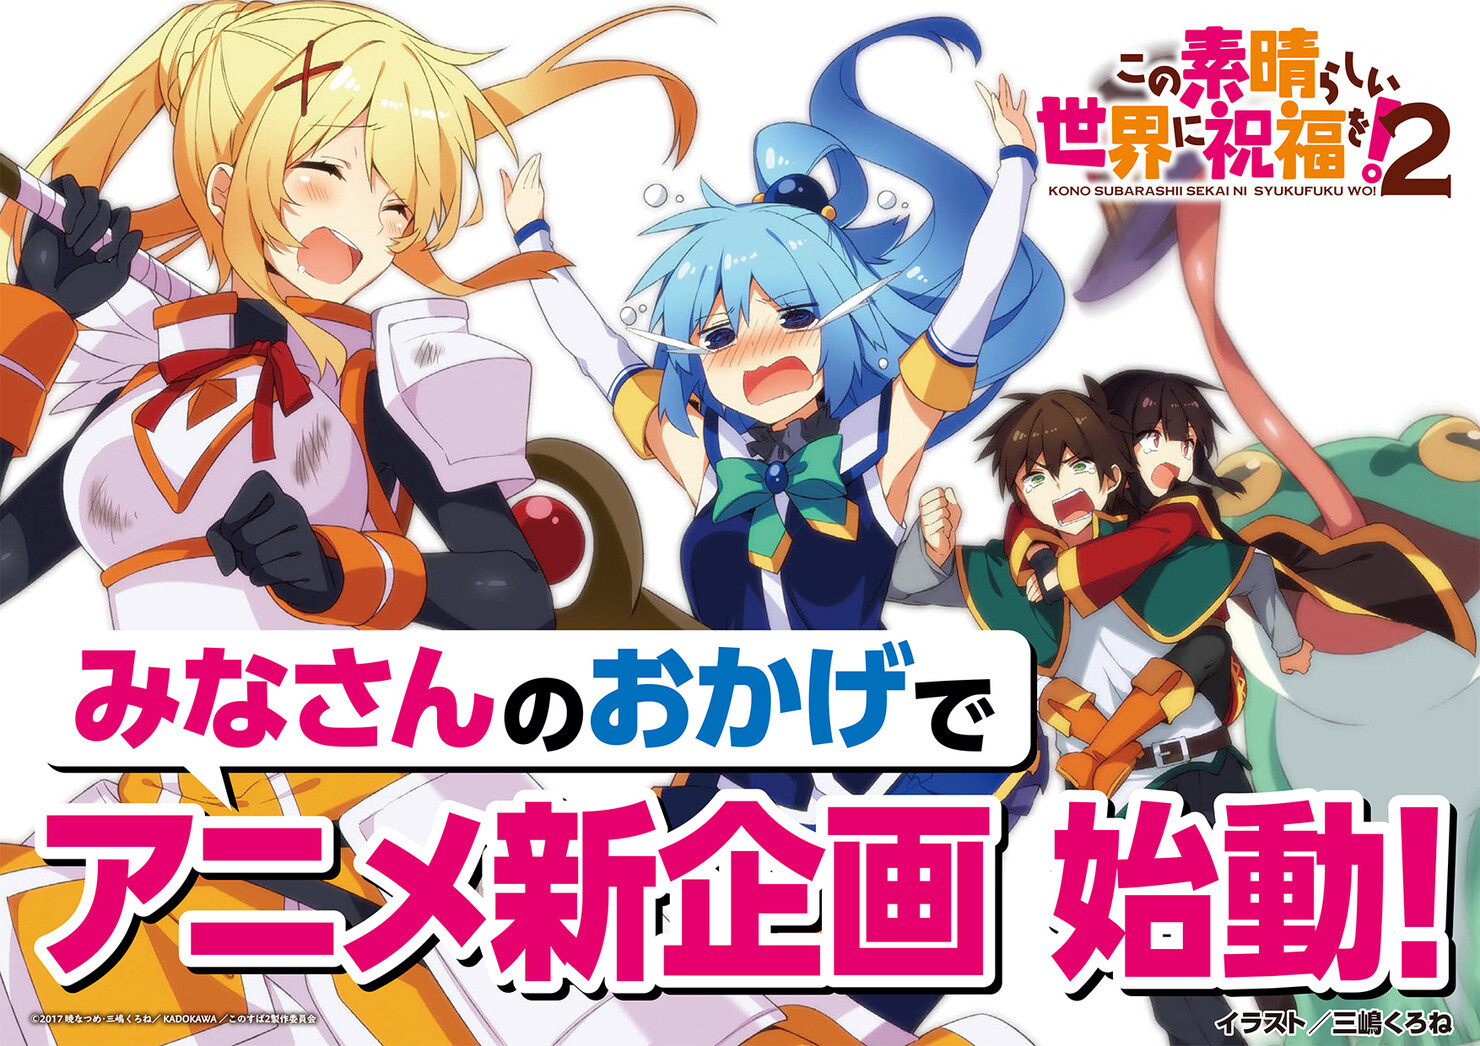 New Anime Project of 'Kono Subarashii Sekai ni Shukufuku wo!' Announced 